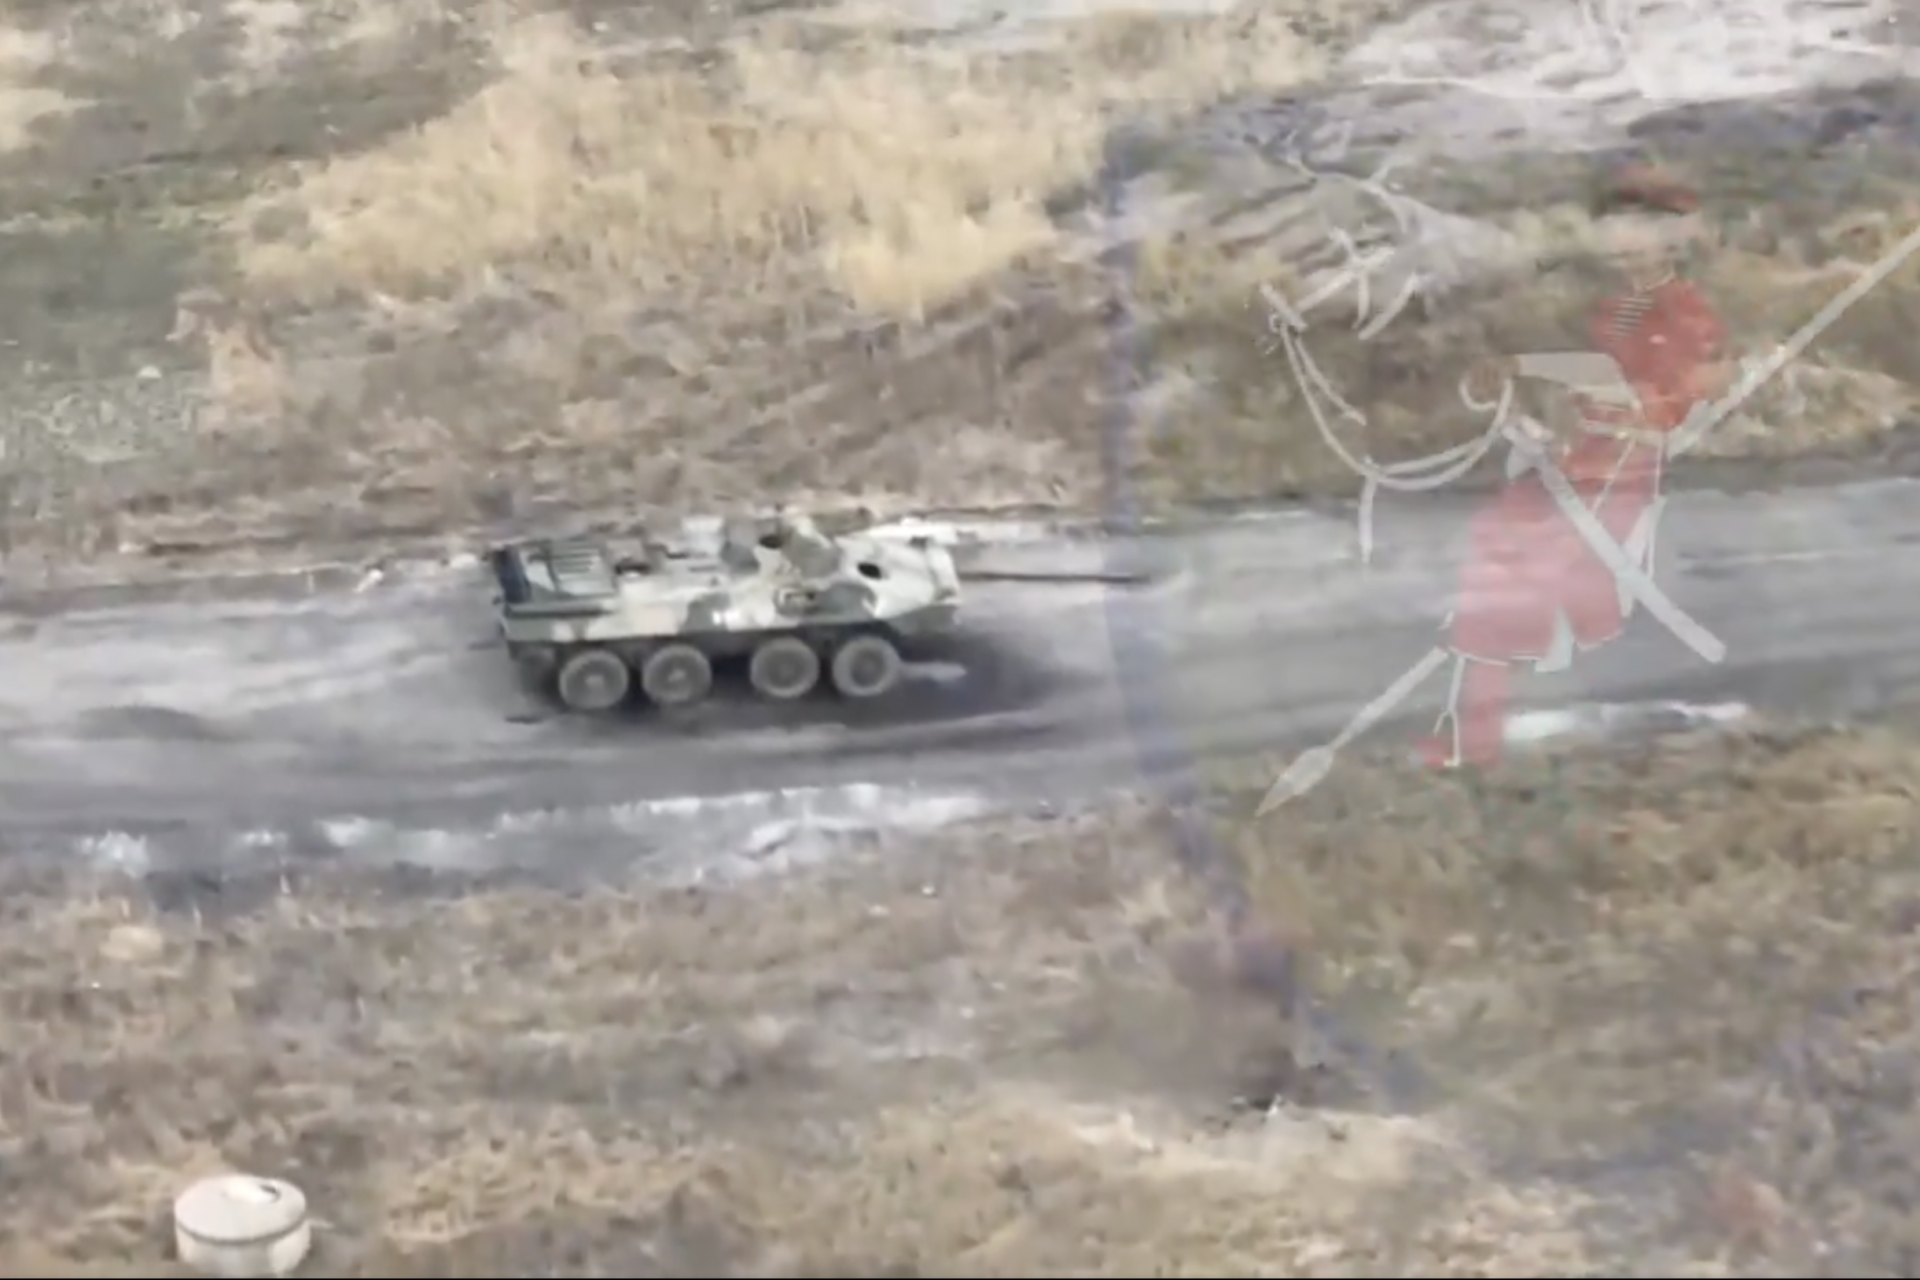 Video footage from Ukraine’s 110th Brigade